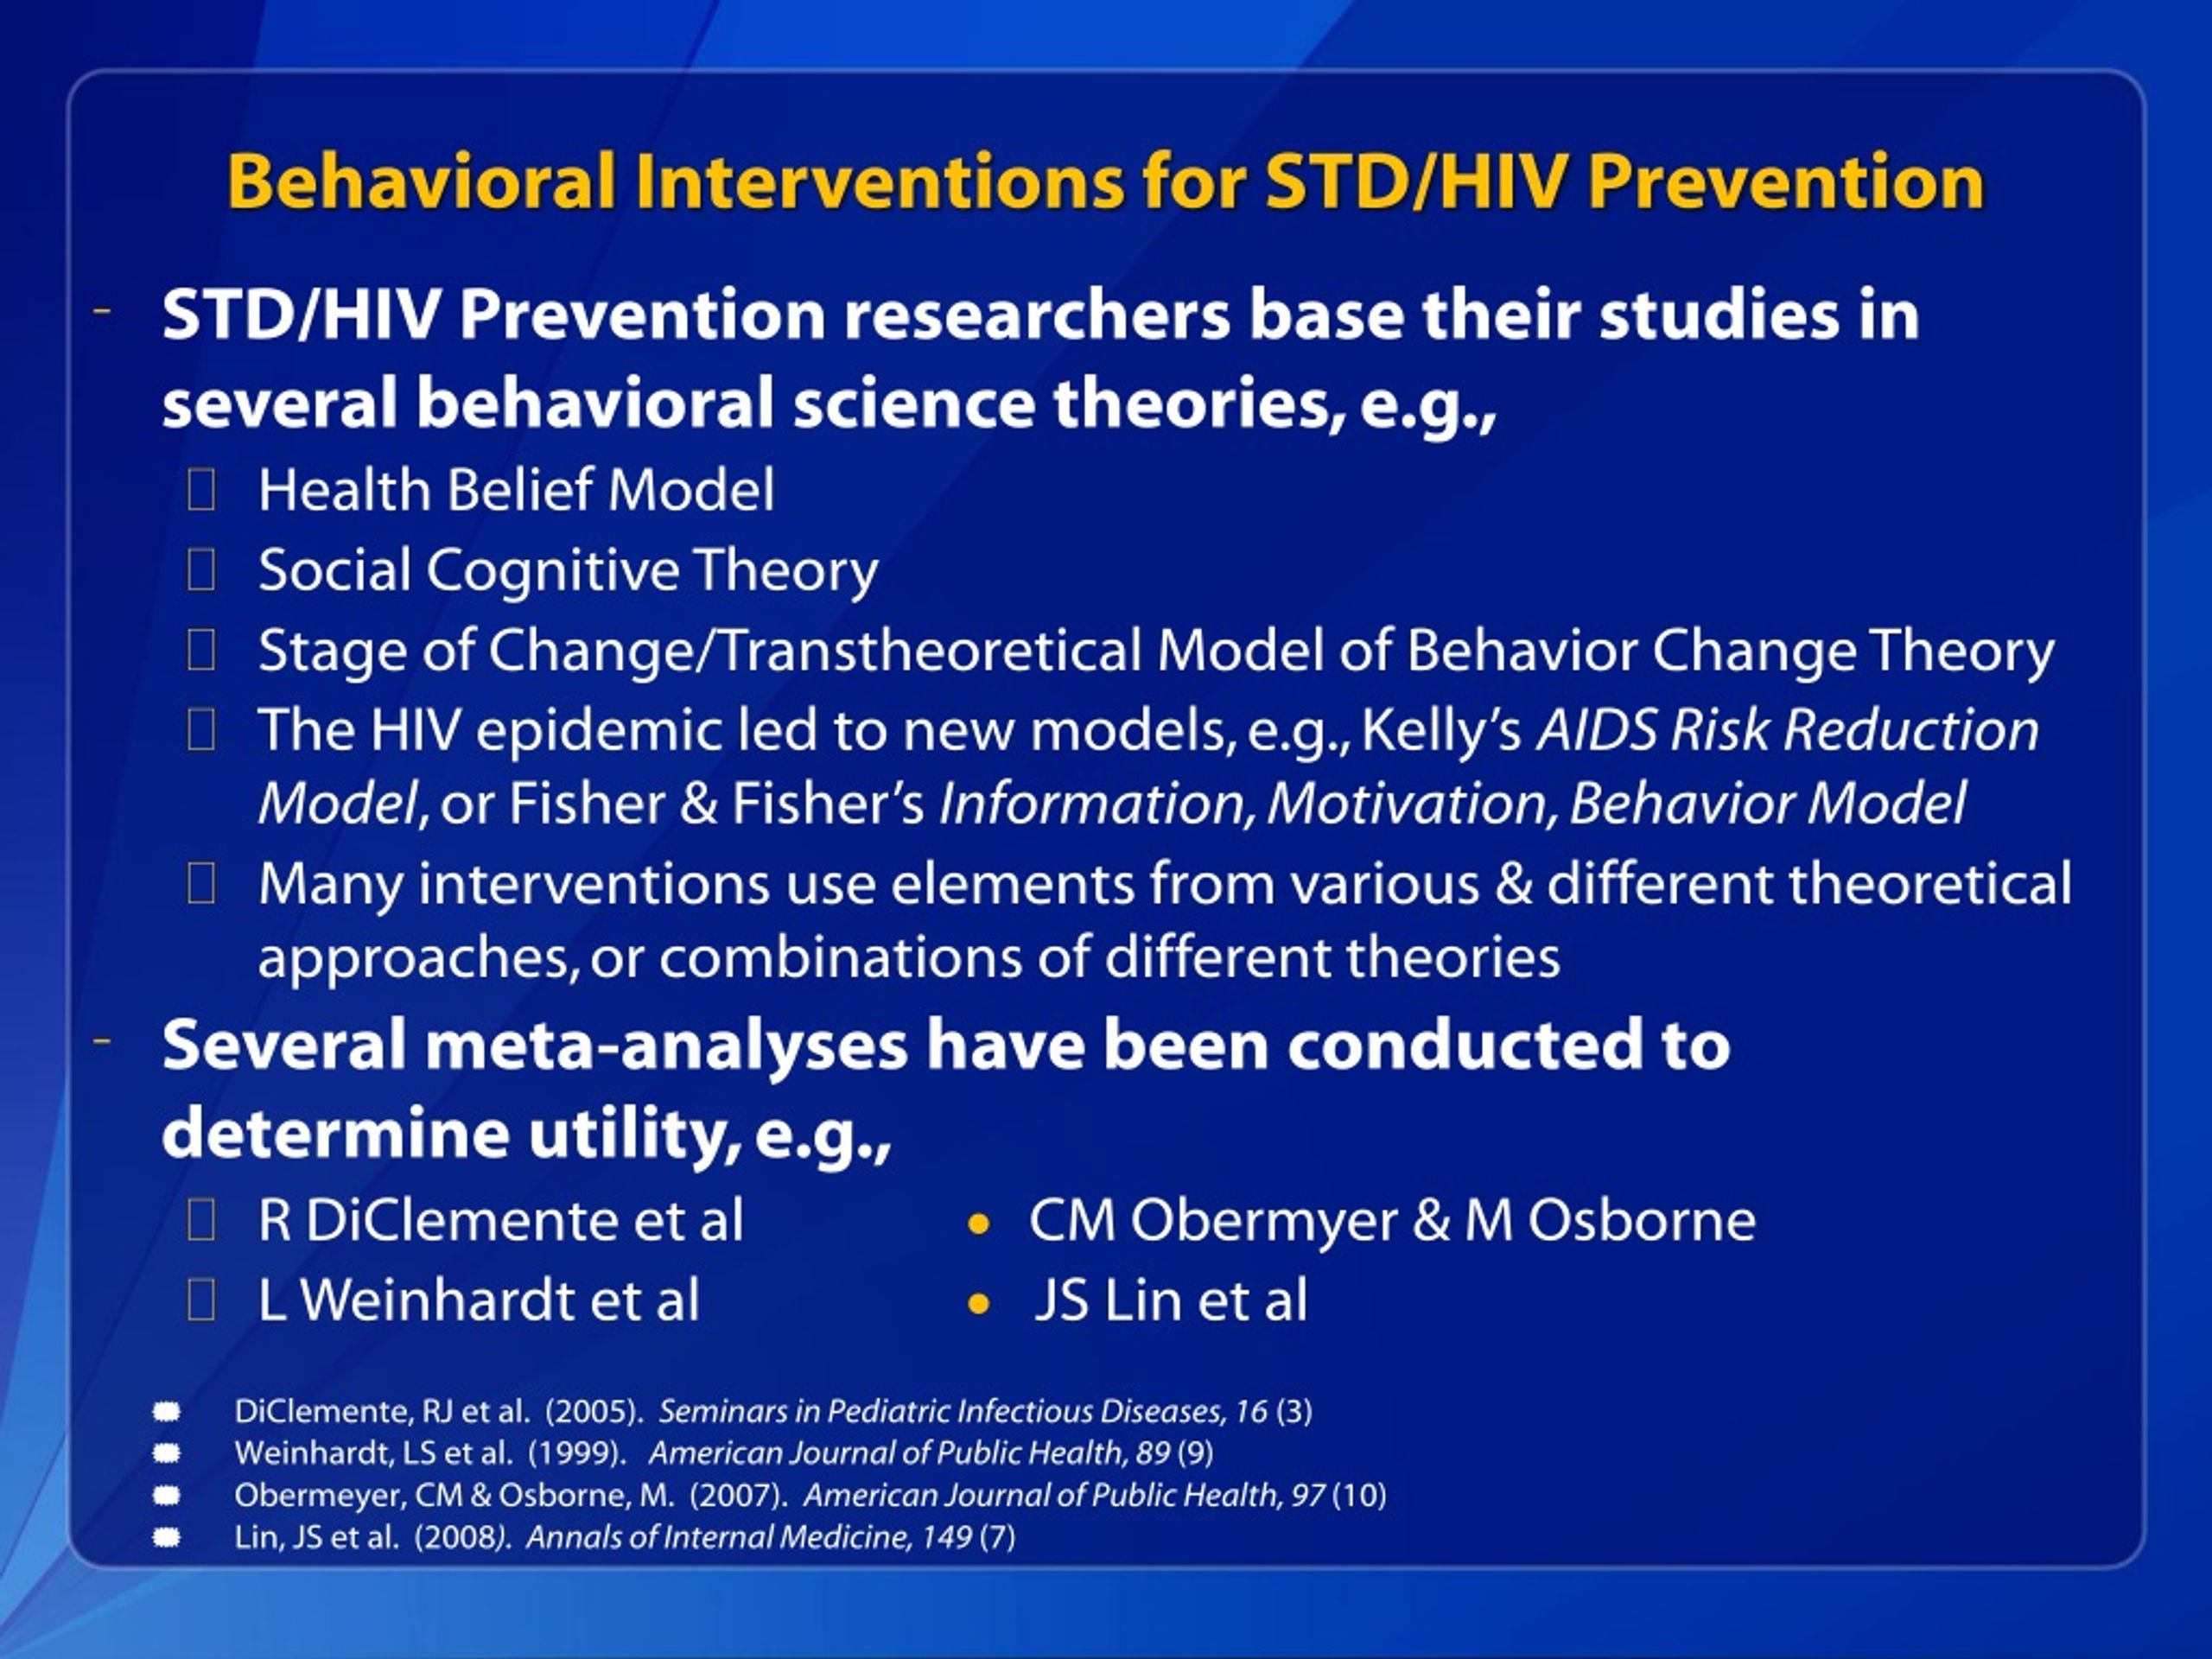 Ppt Behavioral Interventions For Std Hiv Prevention Powerpoint Presentation Id 300705